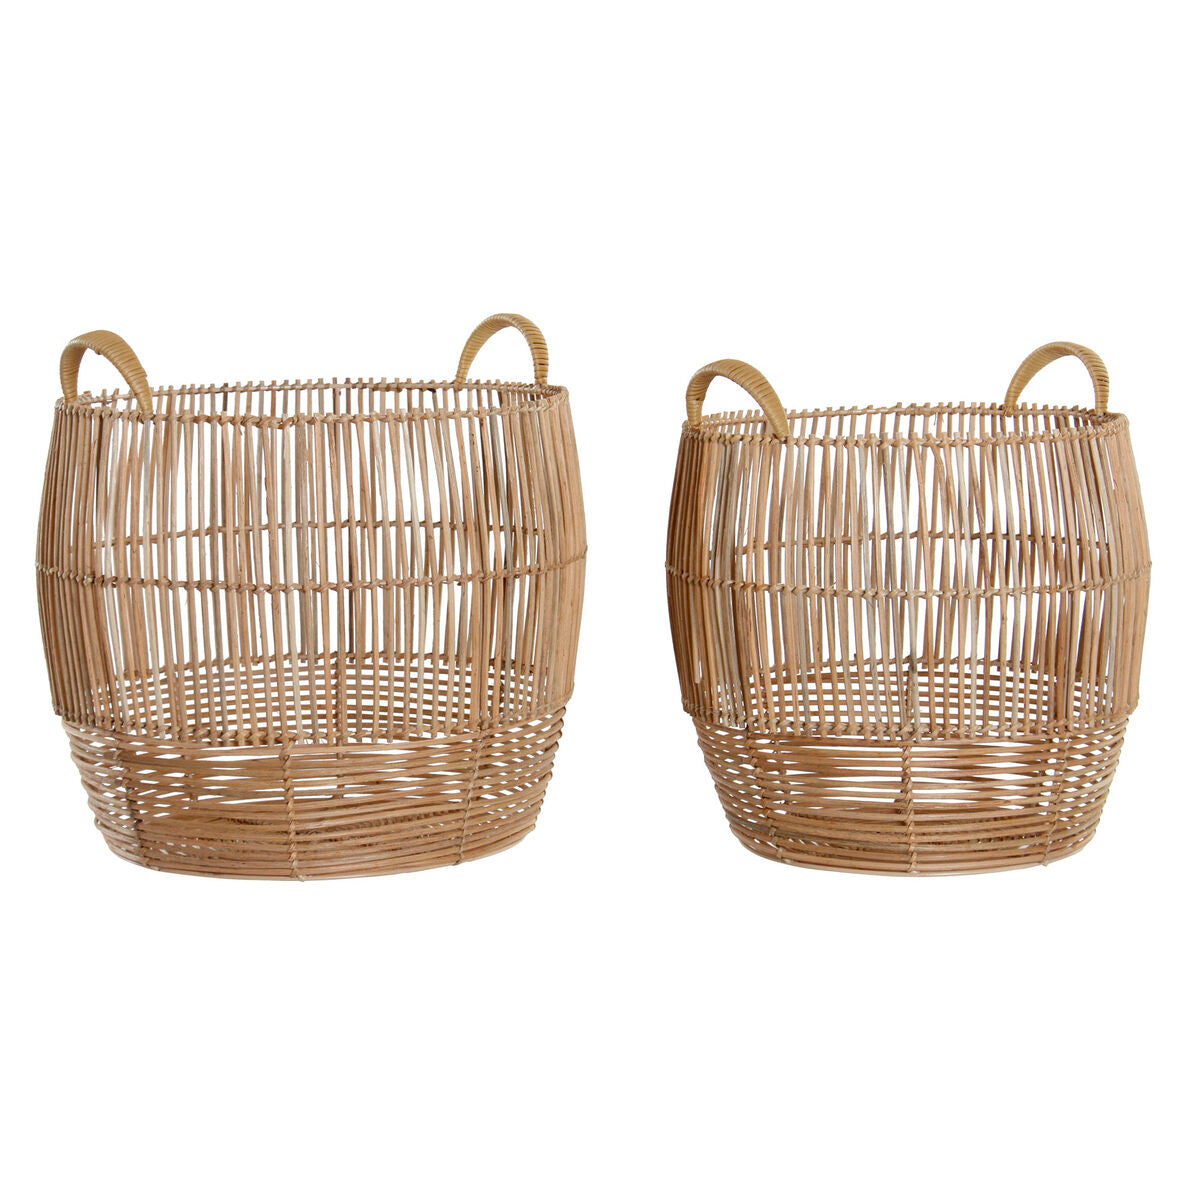 Basket set in Rattan (40 x 40 x 38 cm)